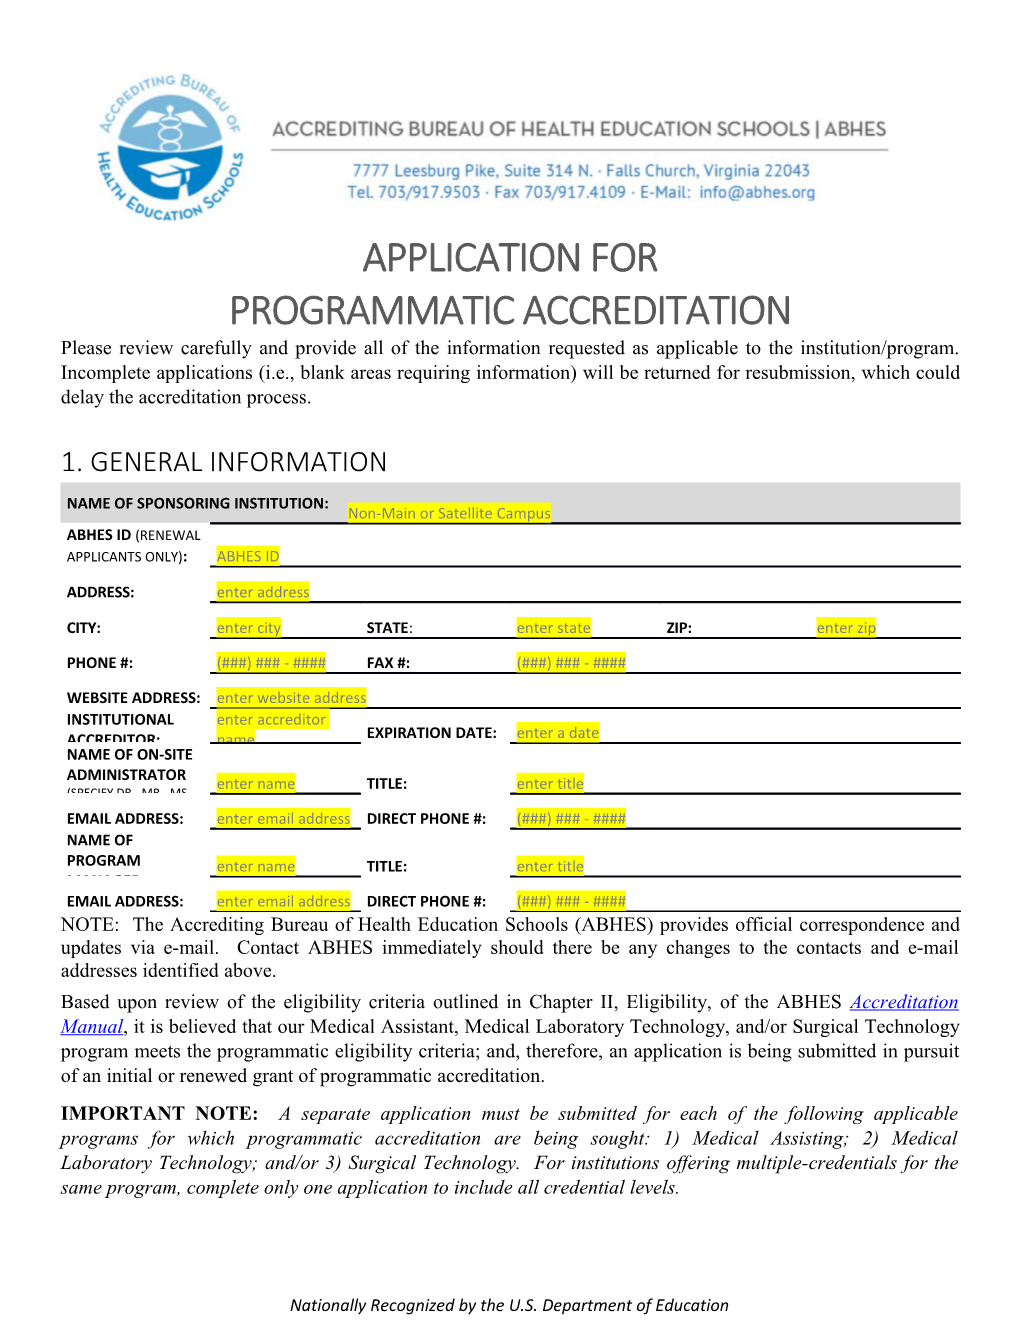 Application for Programmatic Accreditation